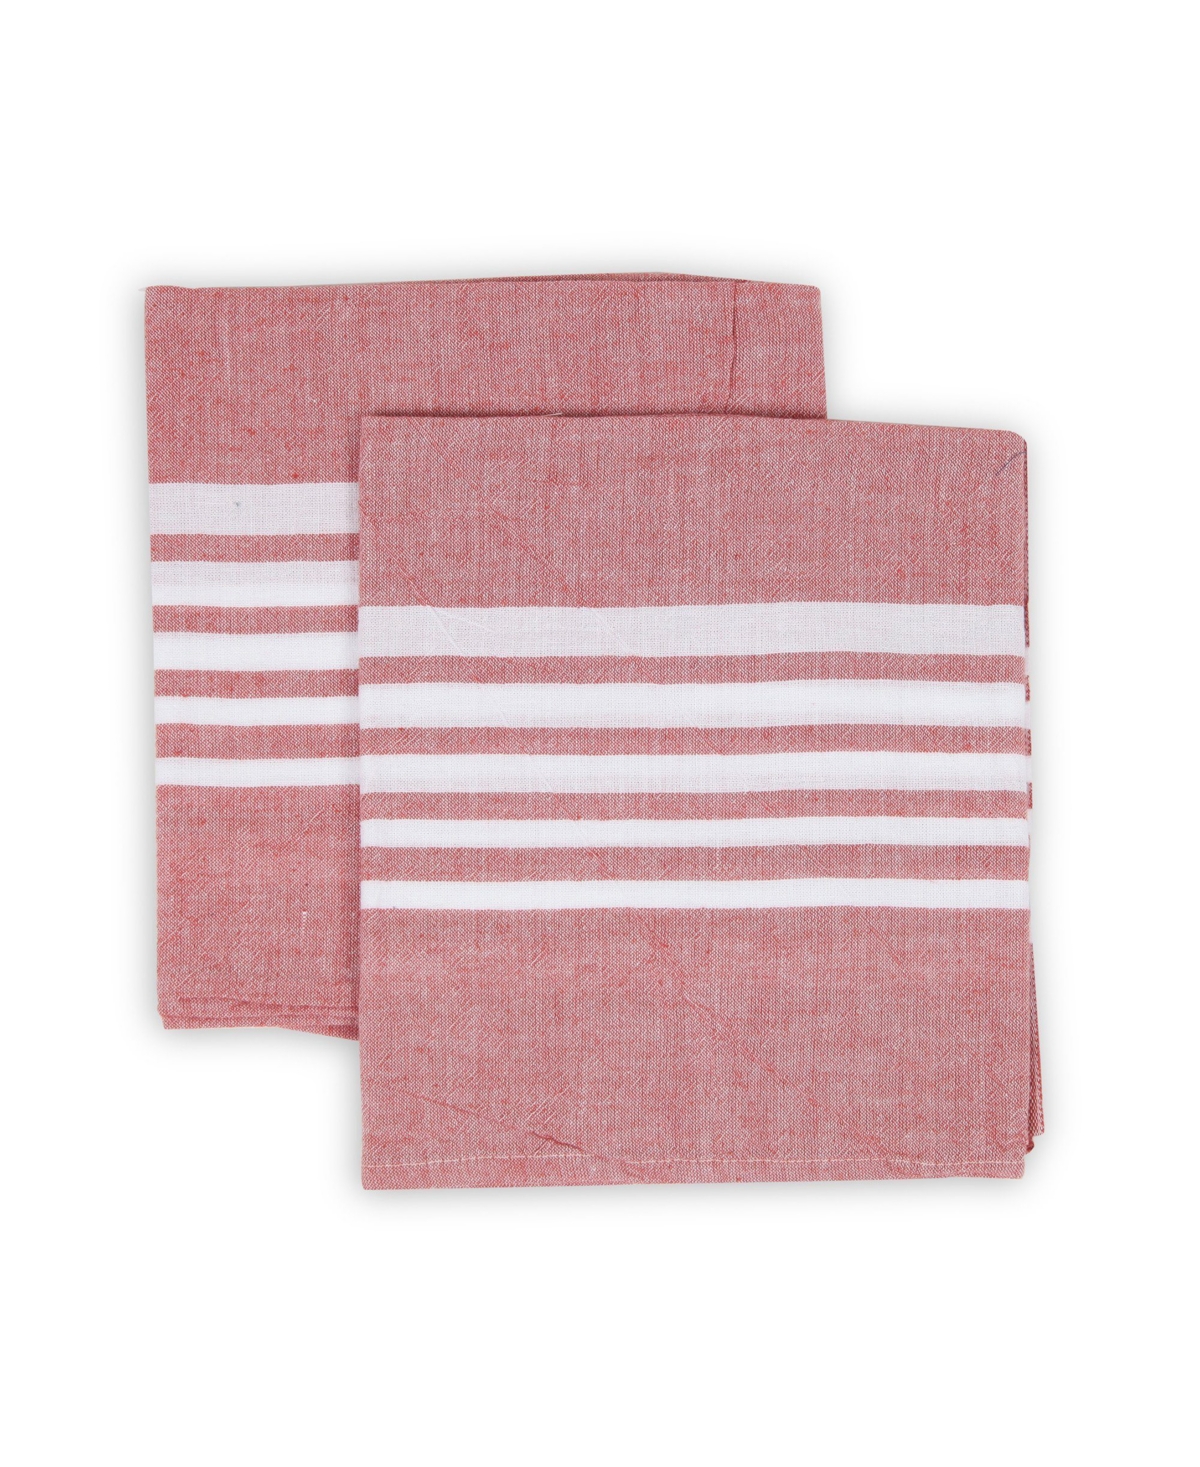 KAF Home Union Stripe Kitchen Dish Towel Set of 3, Plush, Absorbent,  100-Percent Cotton, 18 x 28-inch (Silver)